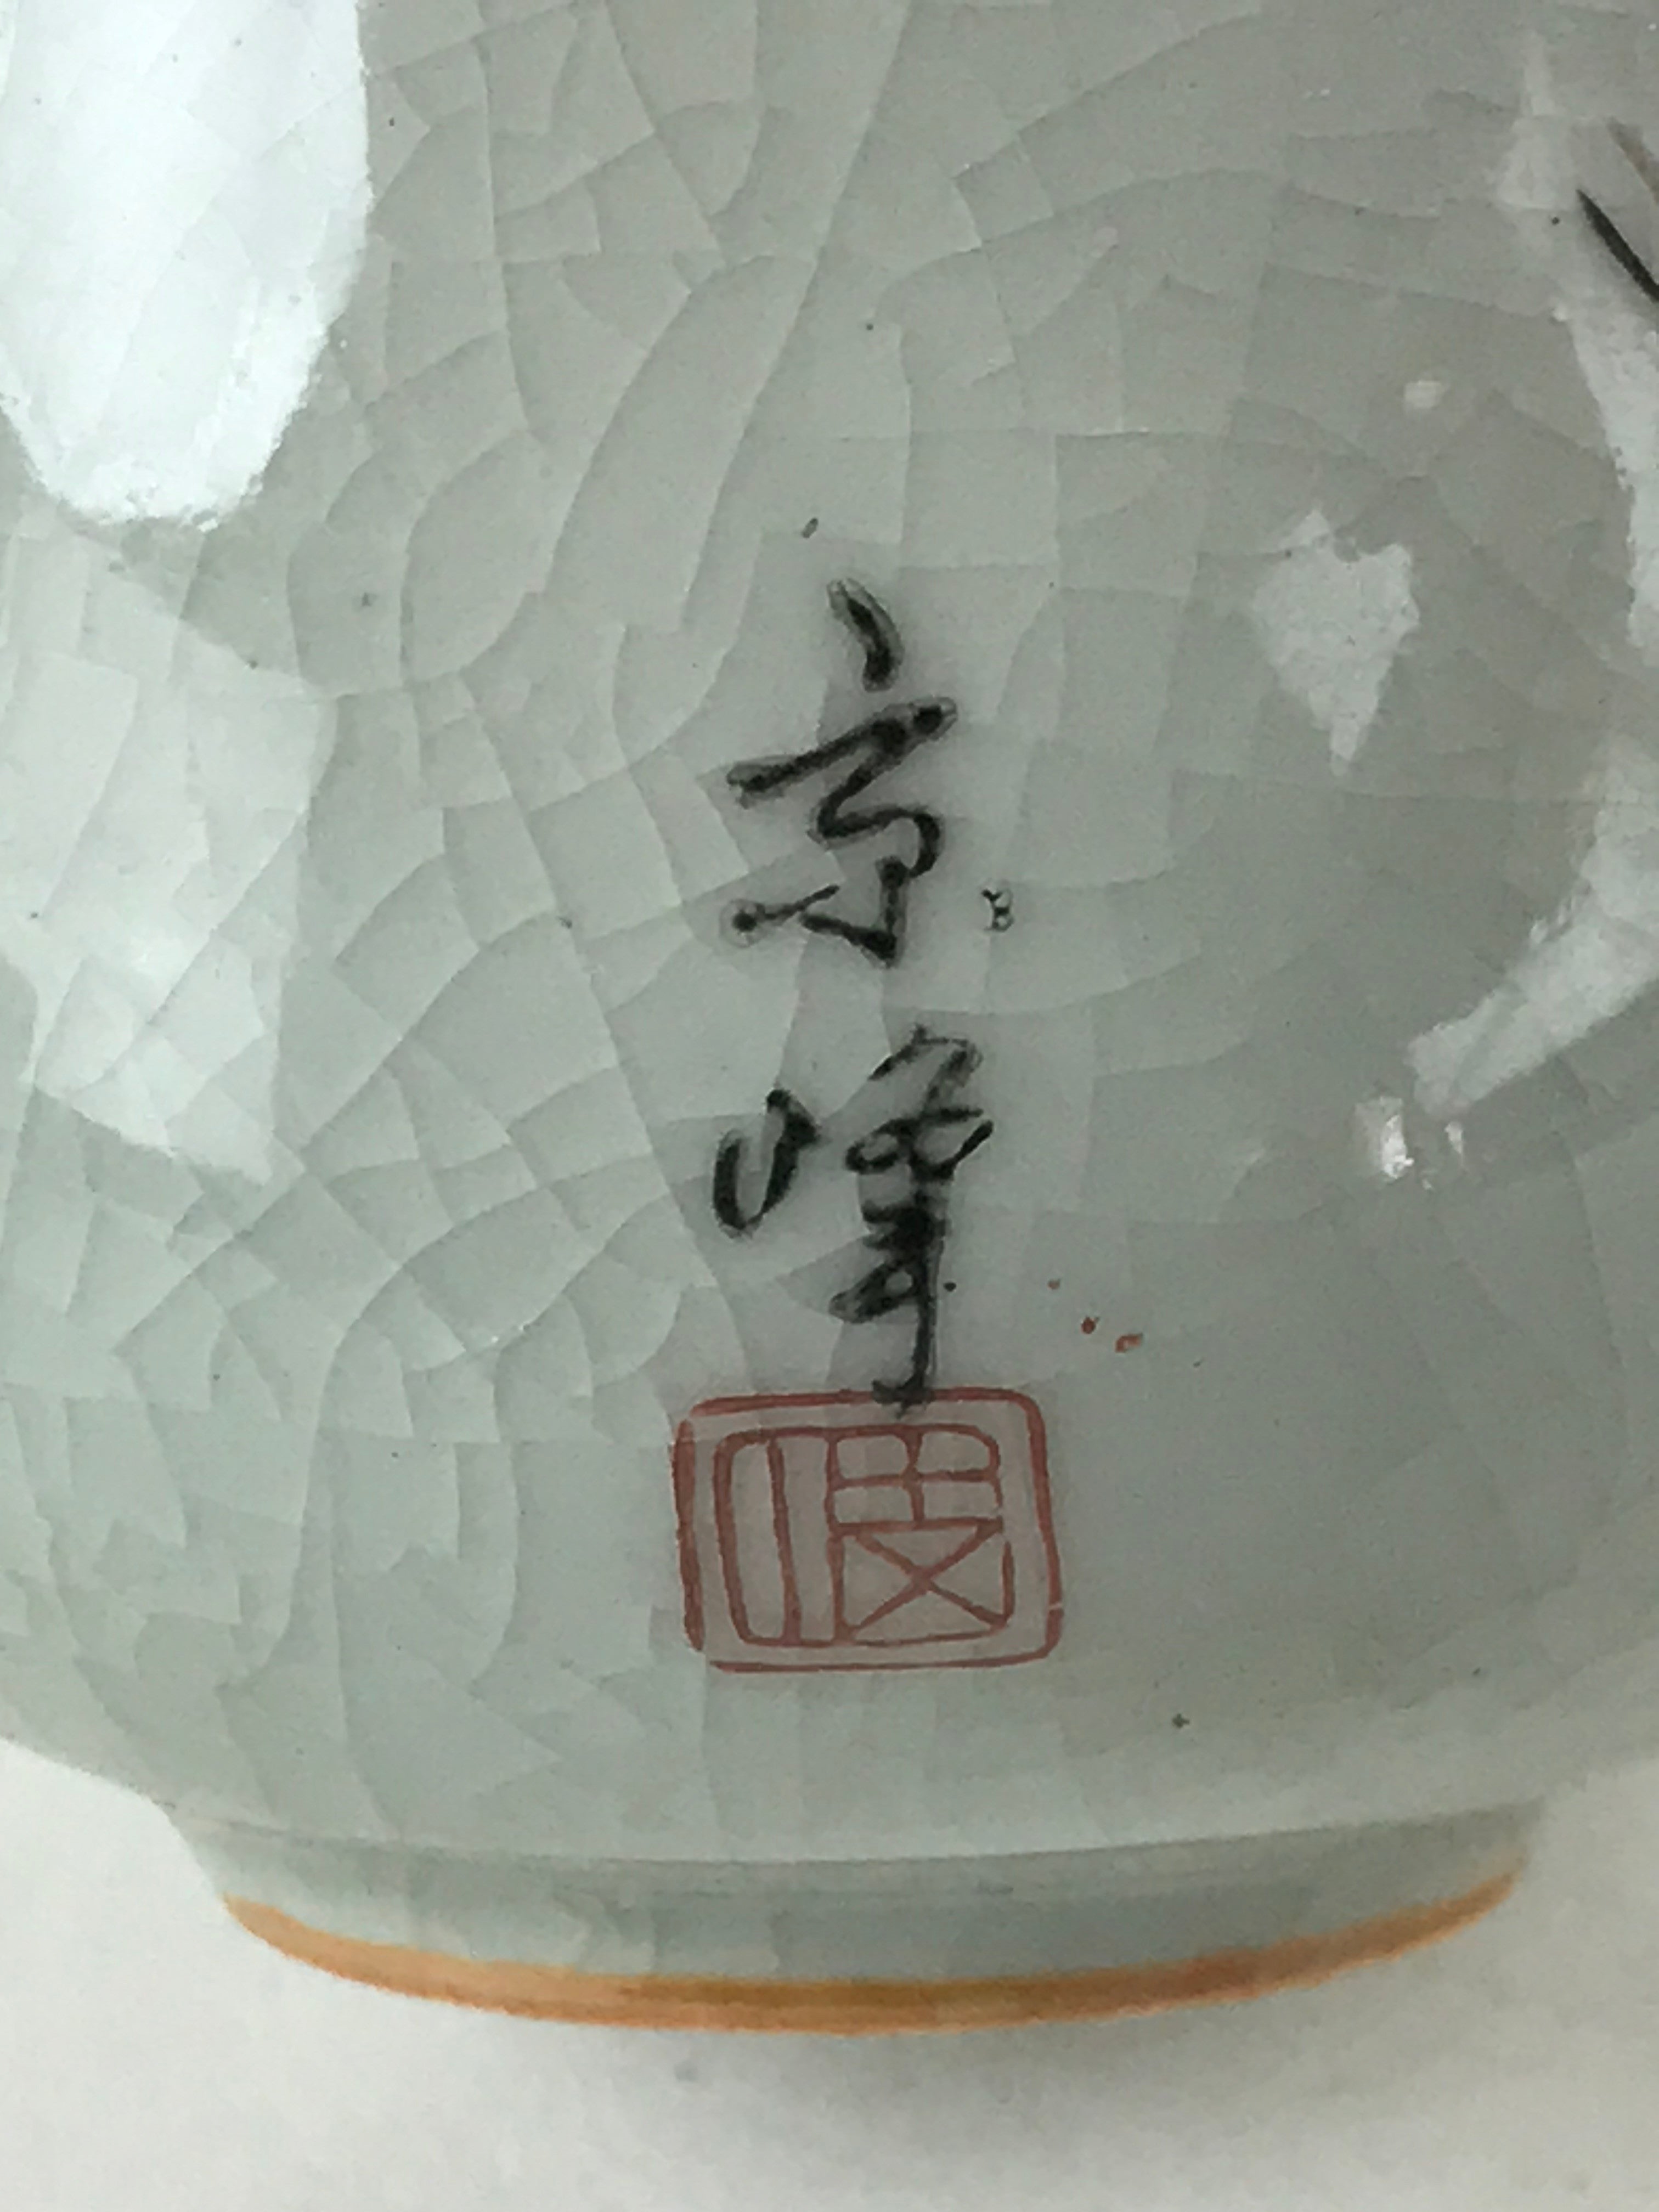 Japanese Ceramic Teacup Vtg Iris Flower Crackle Glaze White Yunomi Sencha TC401